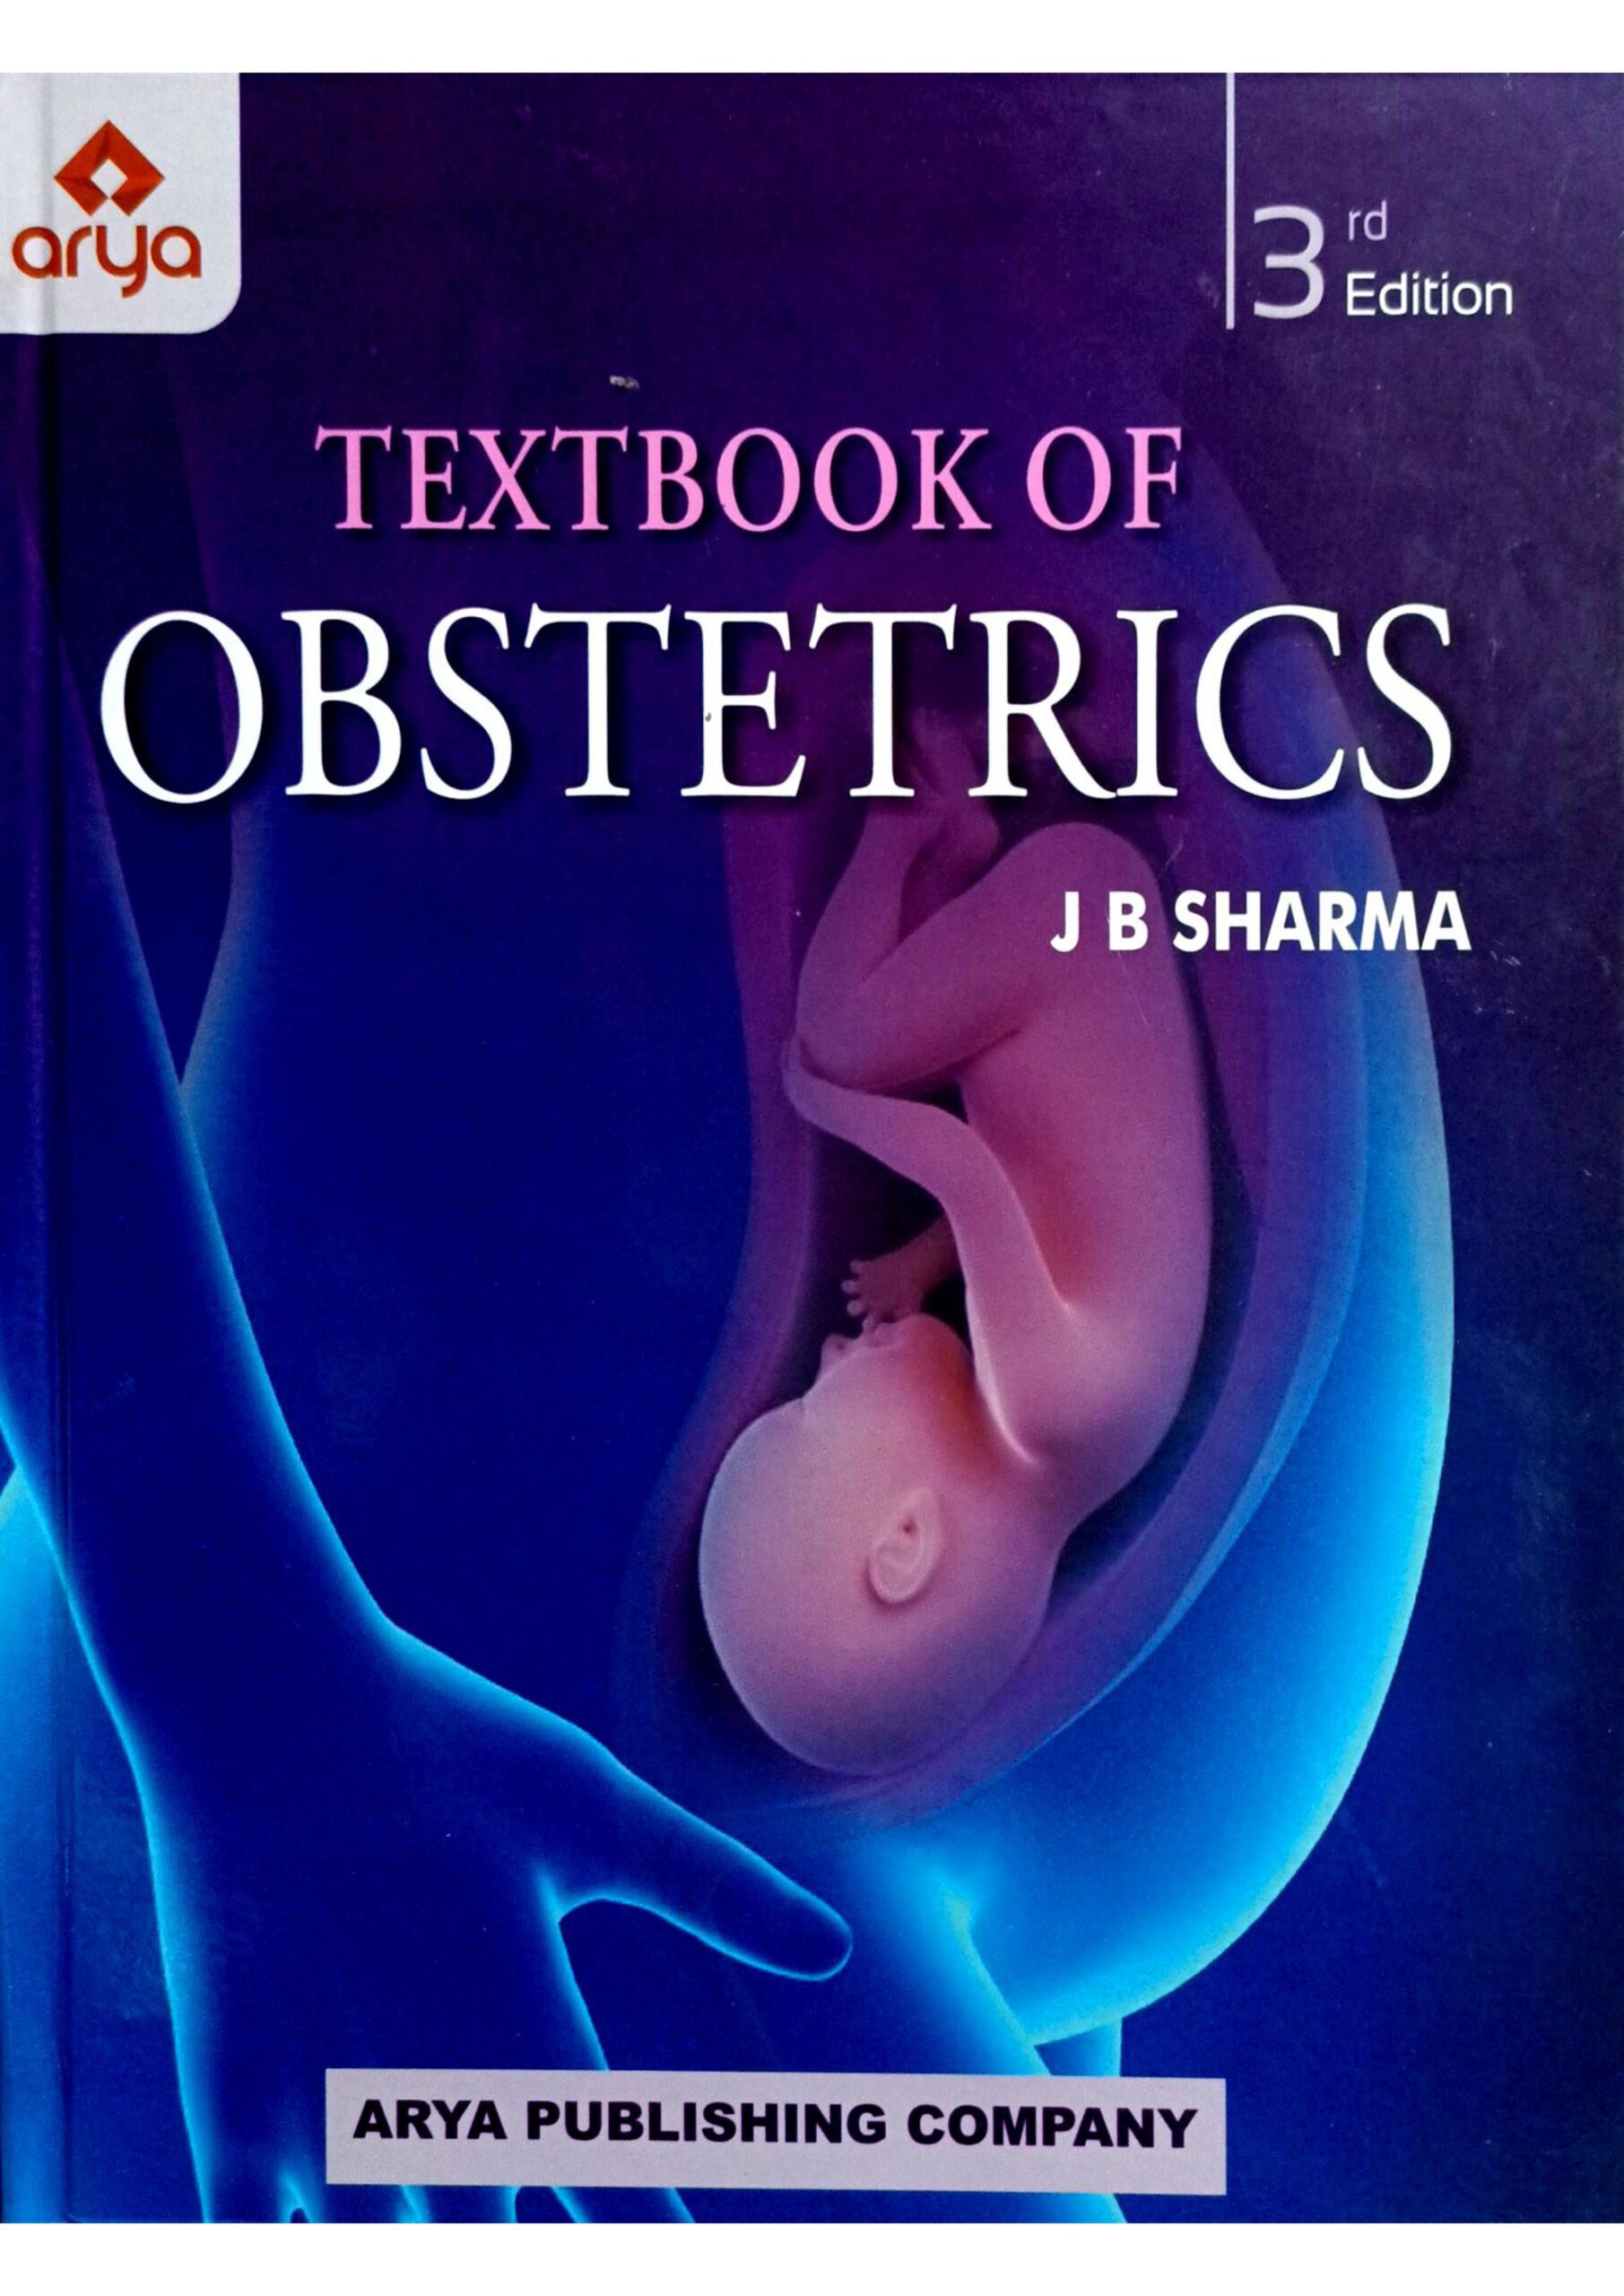 obstetrics illustrated pdf free download